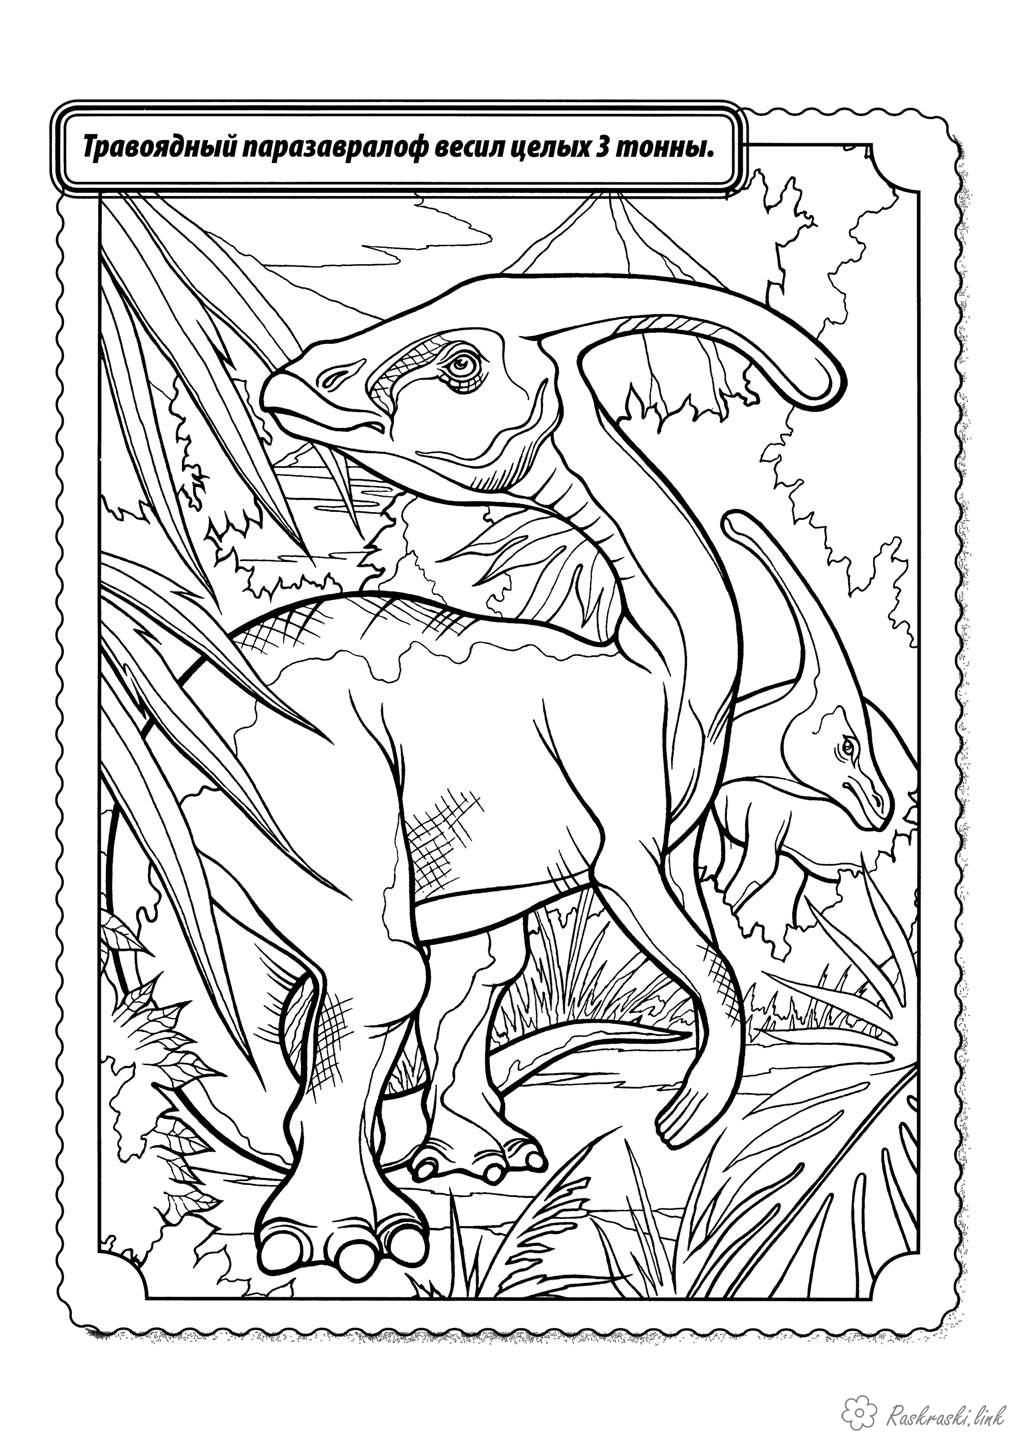 Розмальовки паразавралоф Рептилії, динозавр, травоїдний, паразавралоф